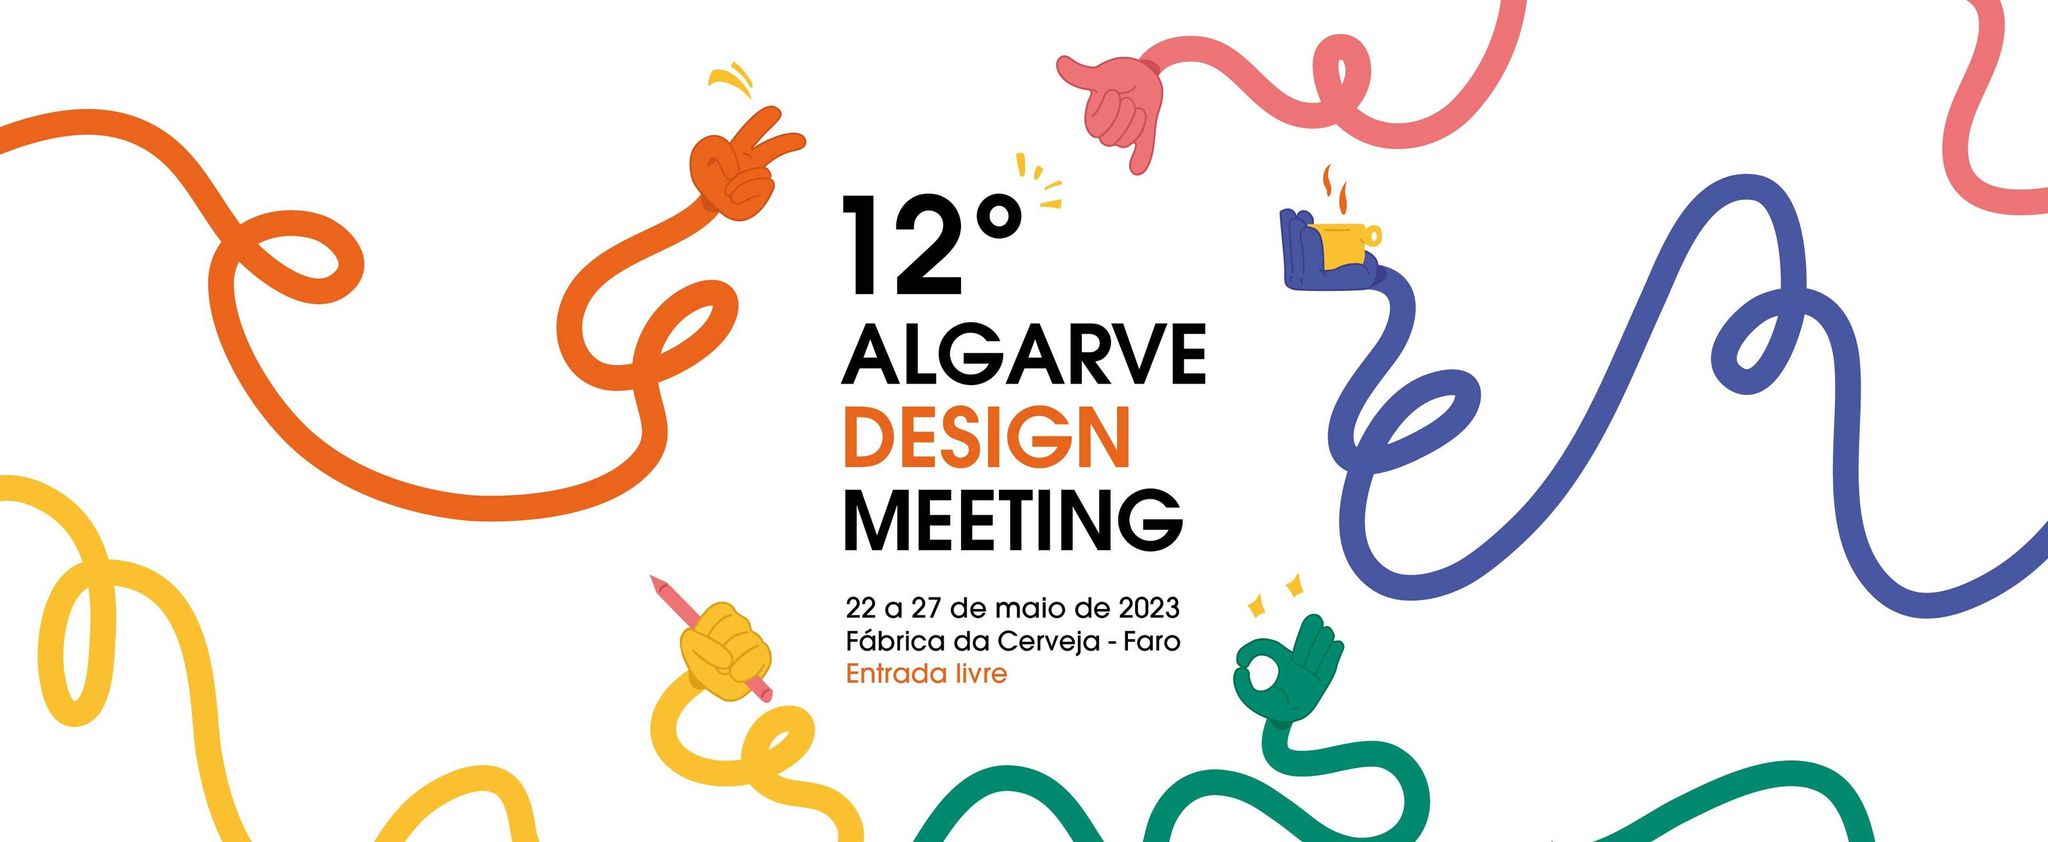 12.º Algarve Design Meeting